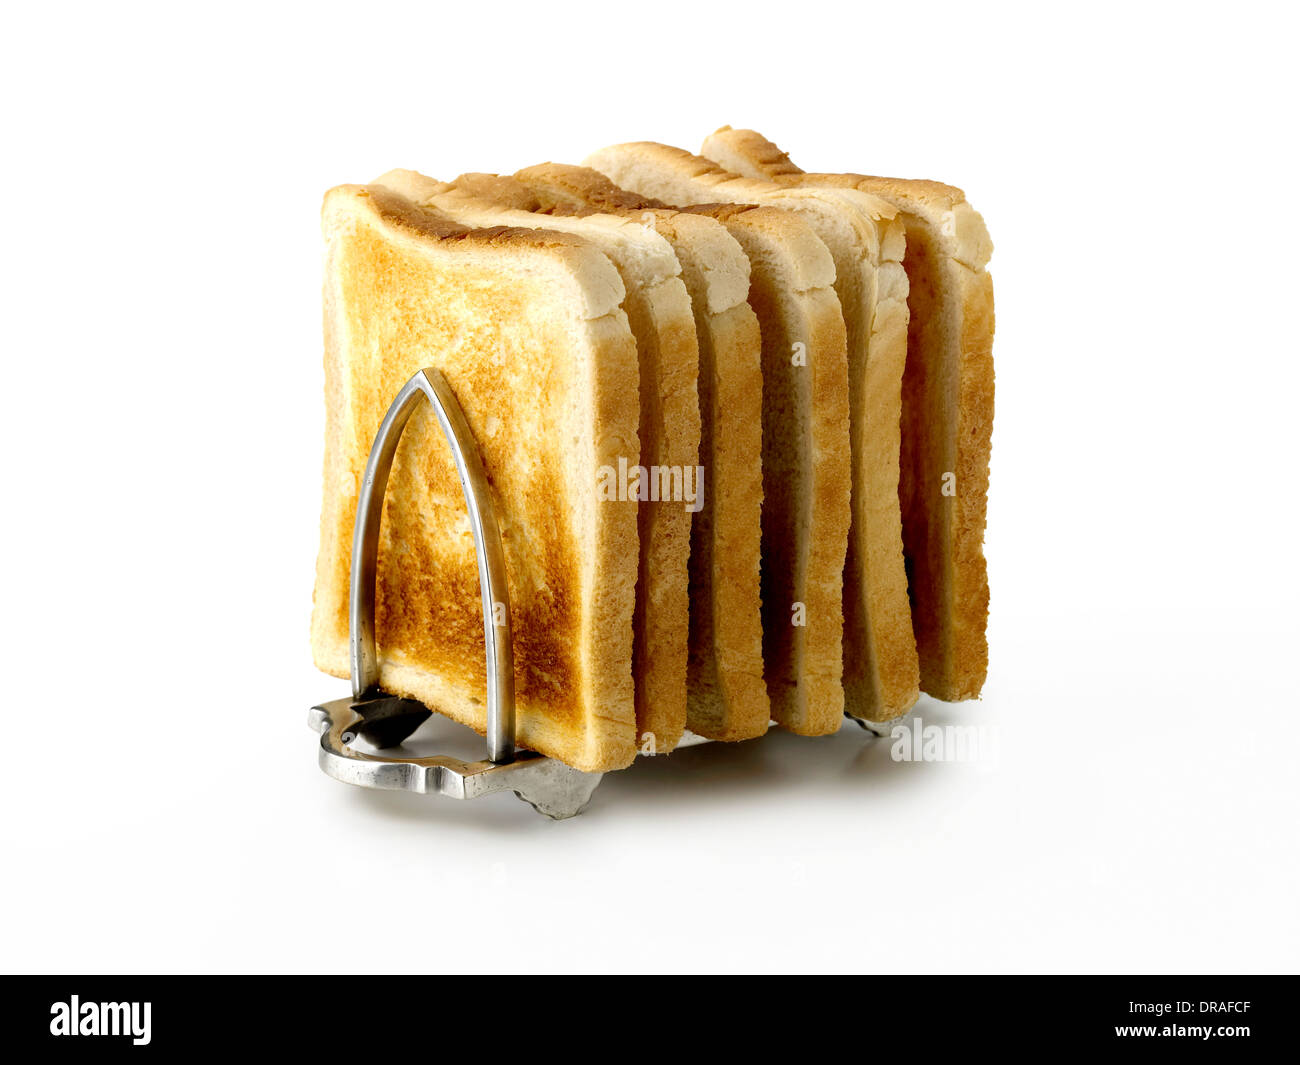 https://c8.alamy.com/comp/DRAFCF/toast-and-toast-rack-DRAFCF.jpg